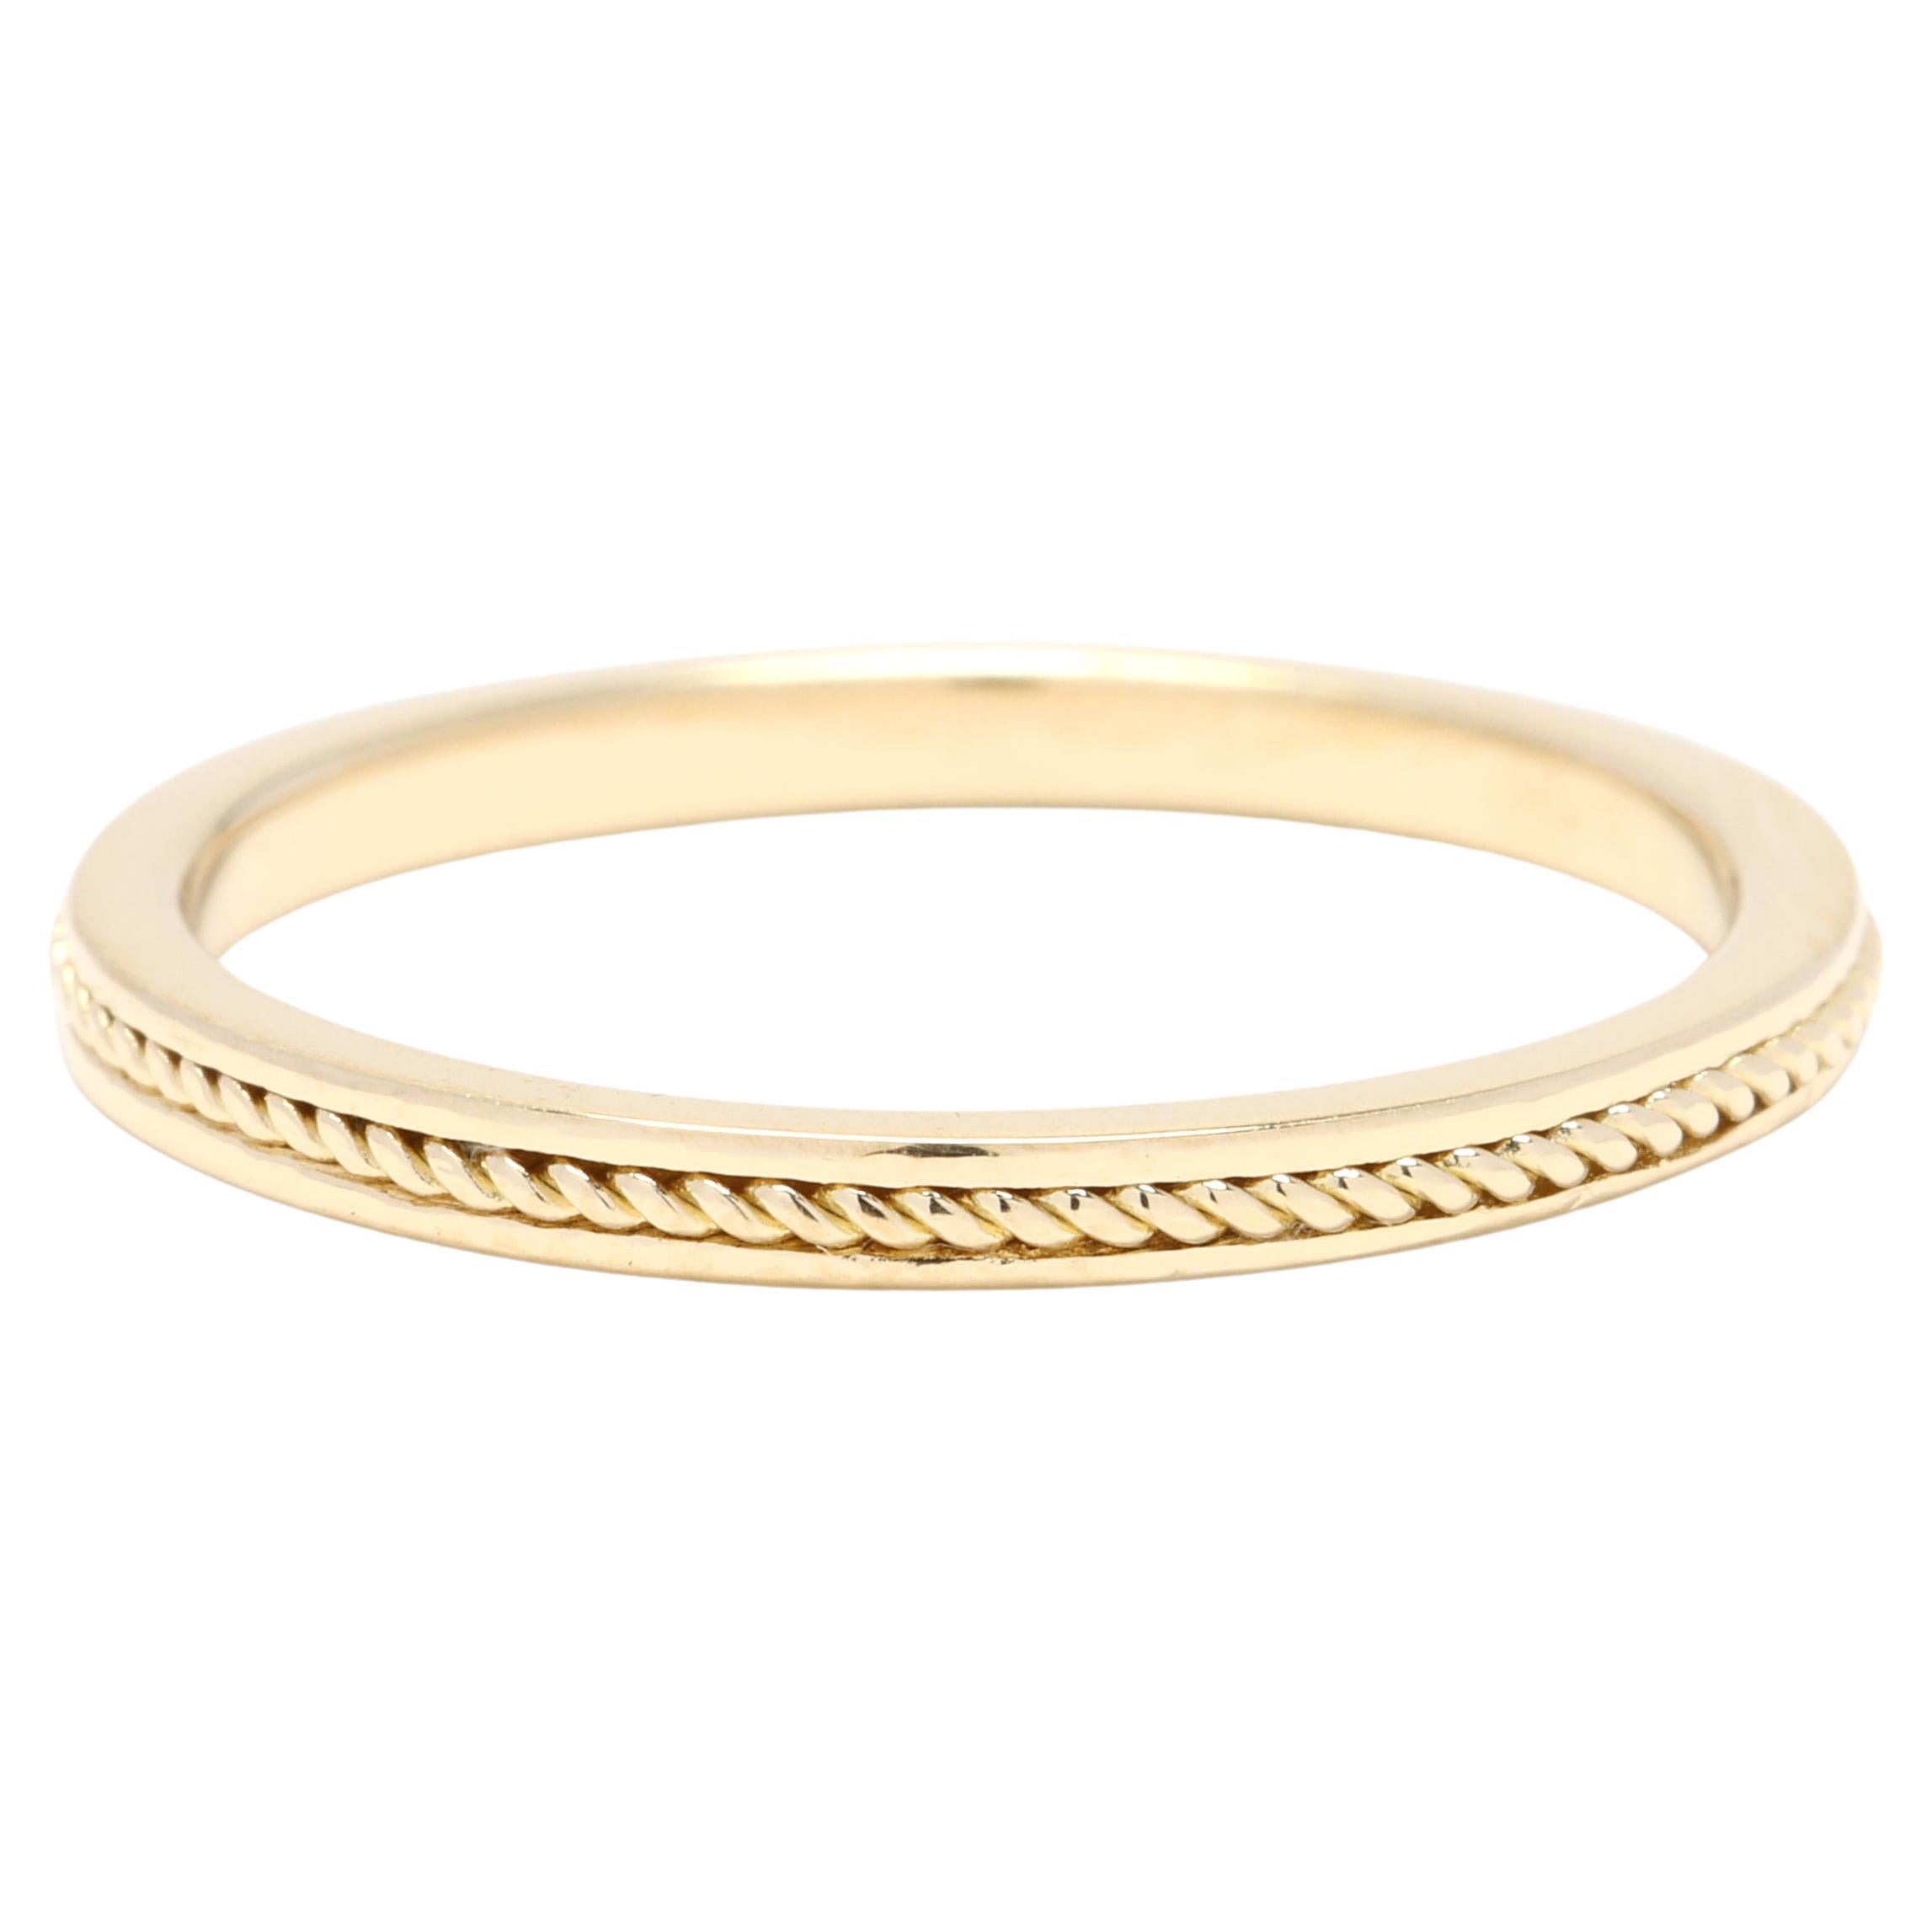 Anillo de oro Hidalgo, oro amarillo de 18 quilates, tamaño del anillo 5,75, anillo de banda de cuerda